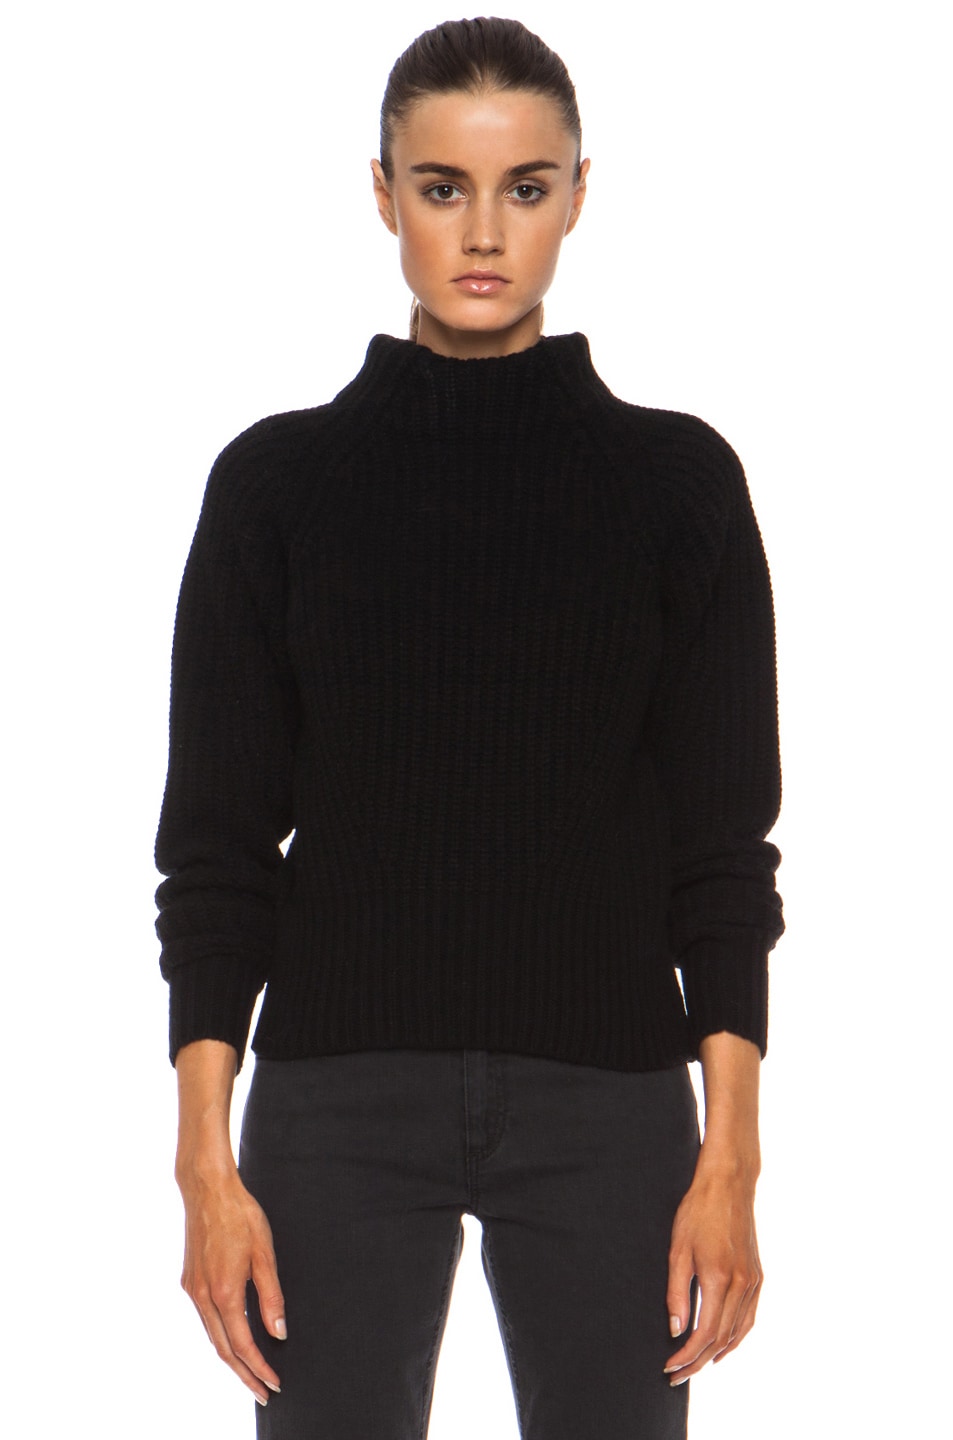 Acne Studios Loyal Turtleneck Wool Sweater in Black | FWRD